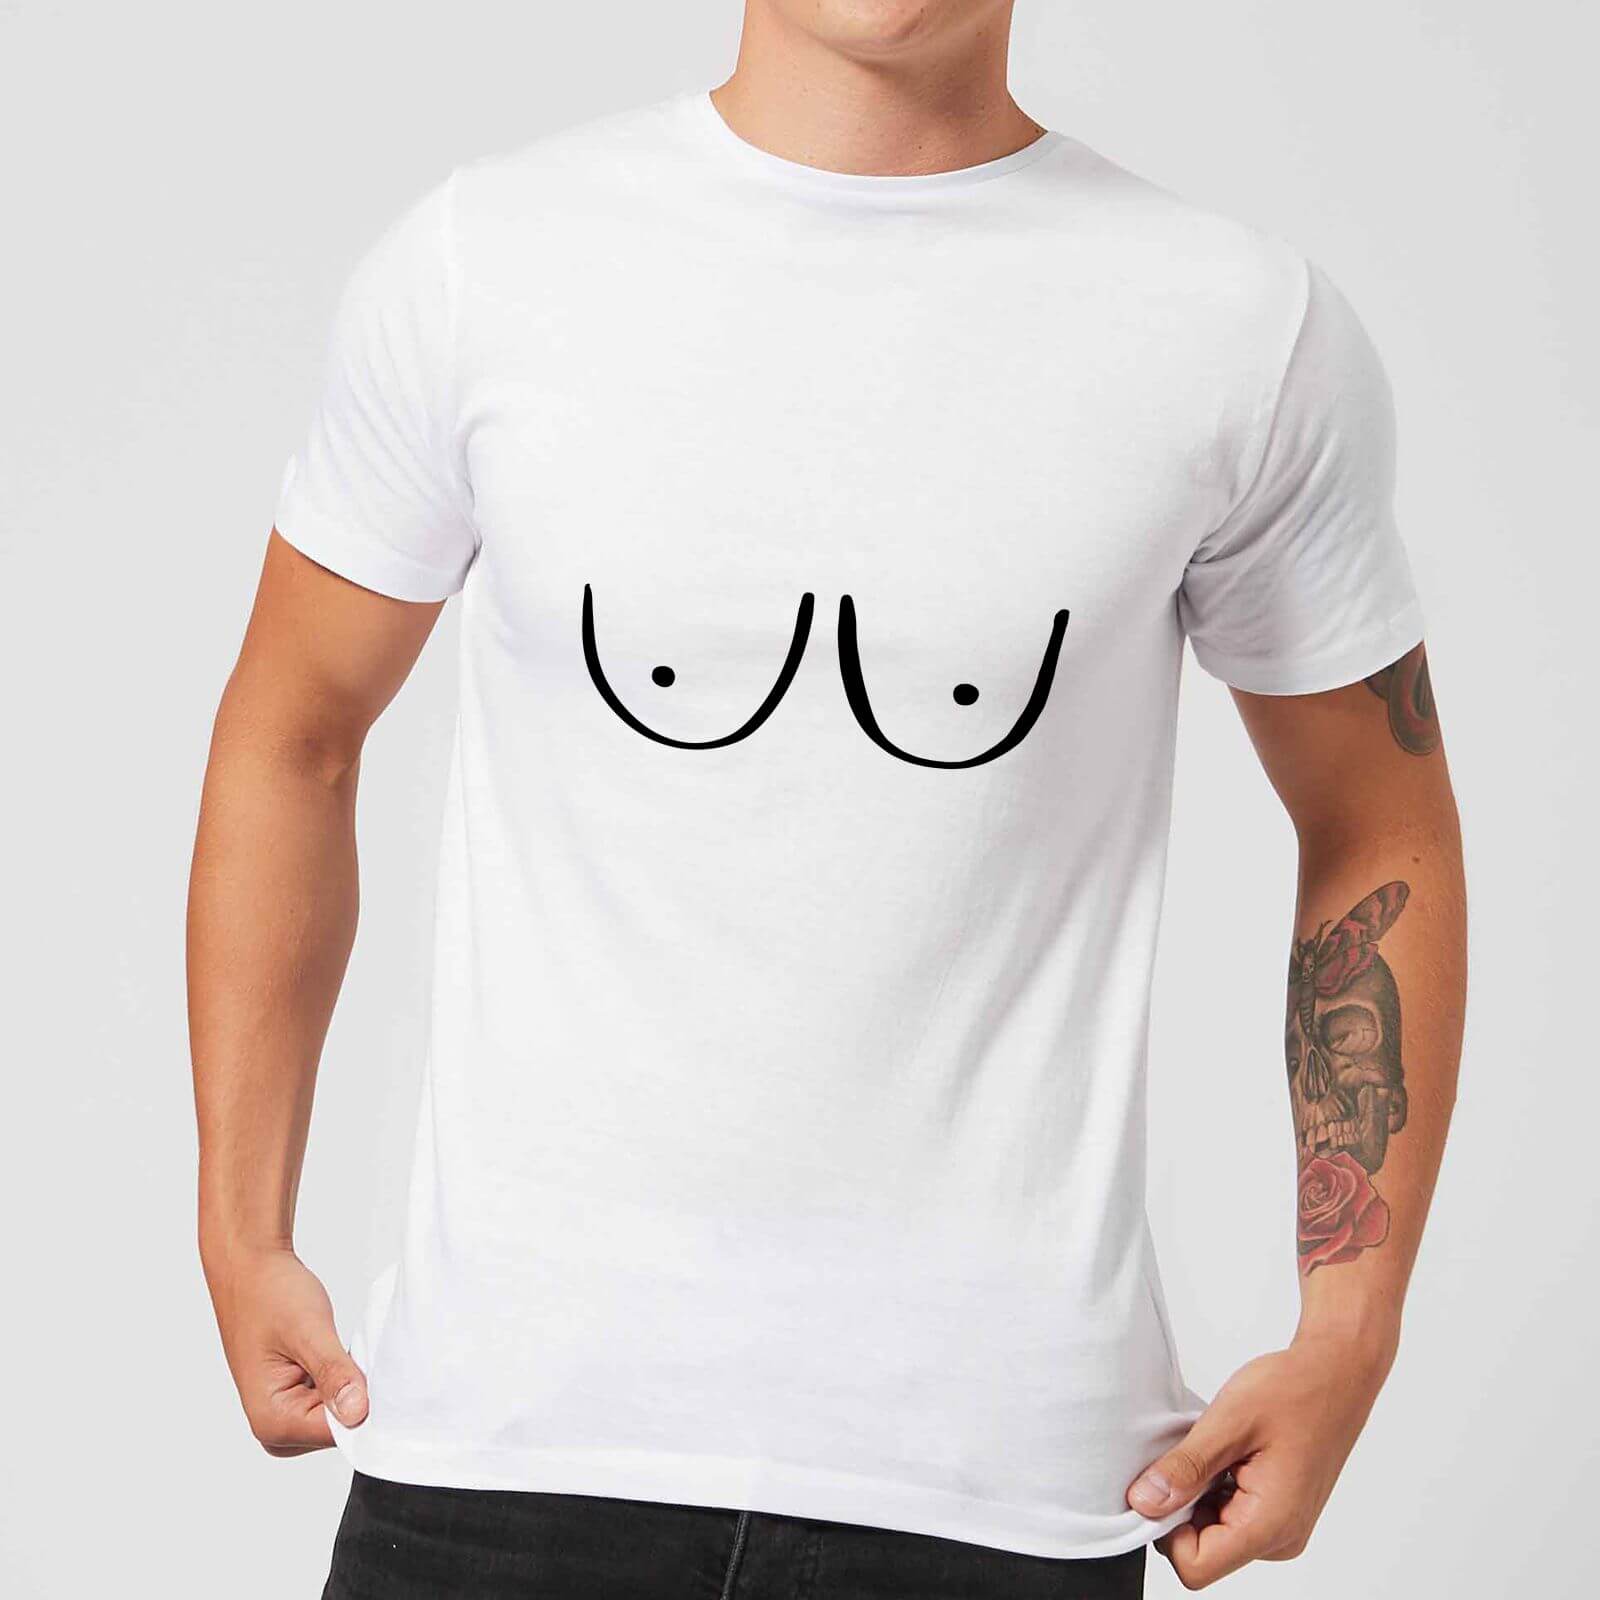 Boobs Men's T-Shirt - White - S